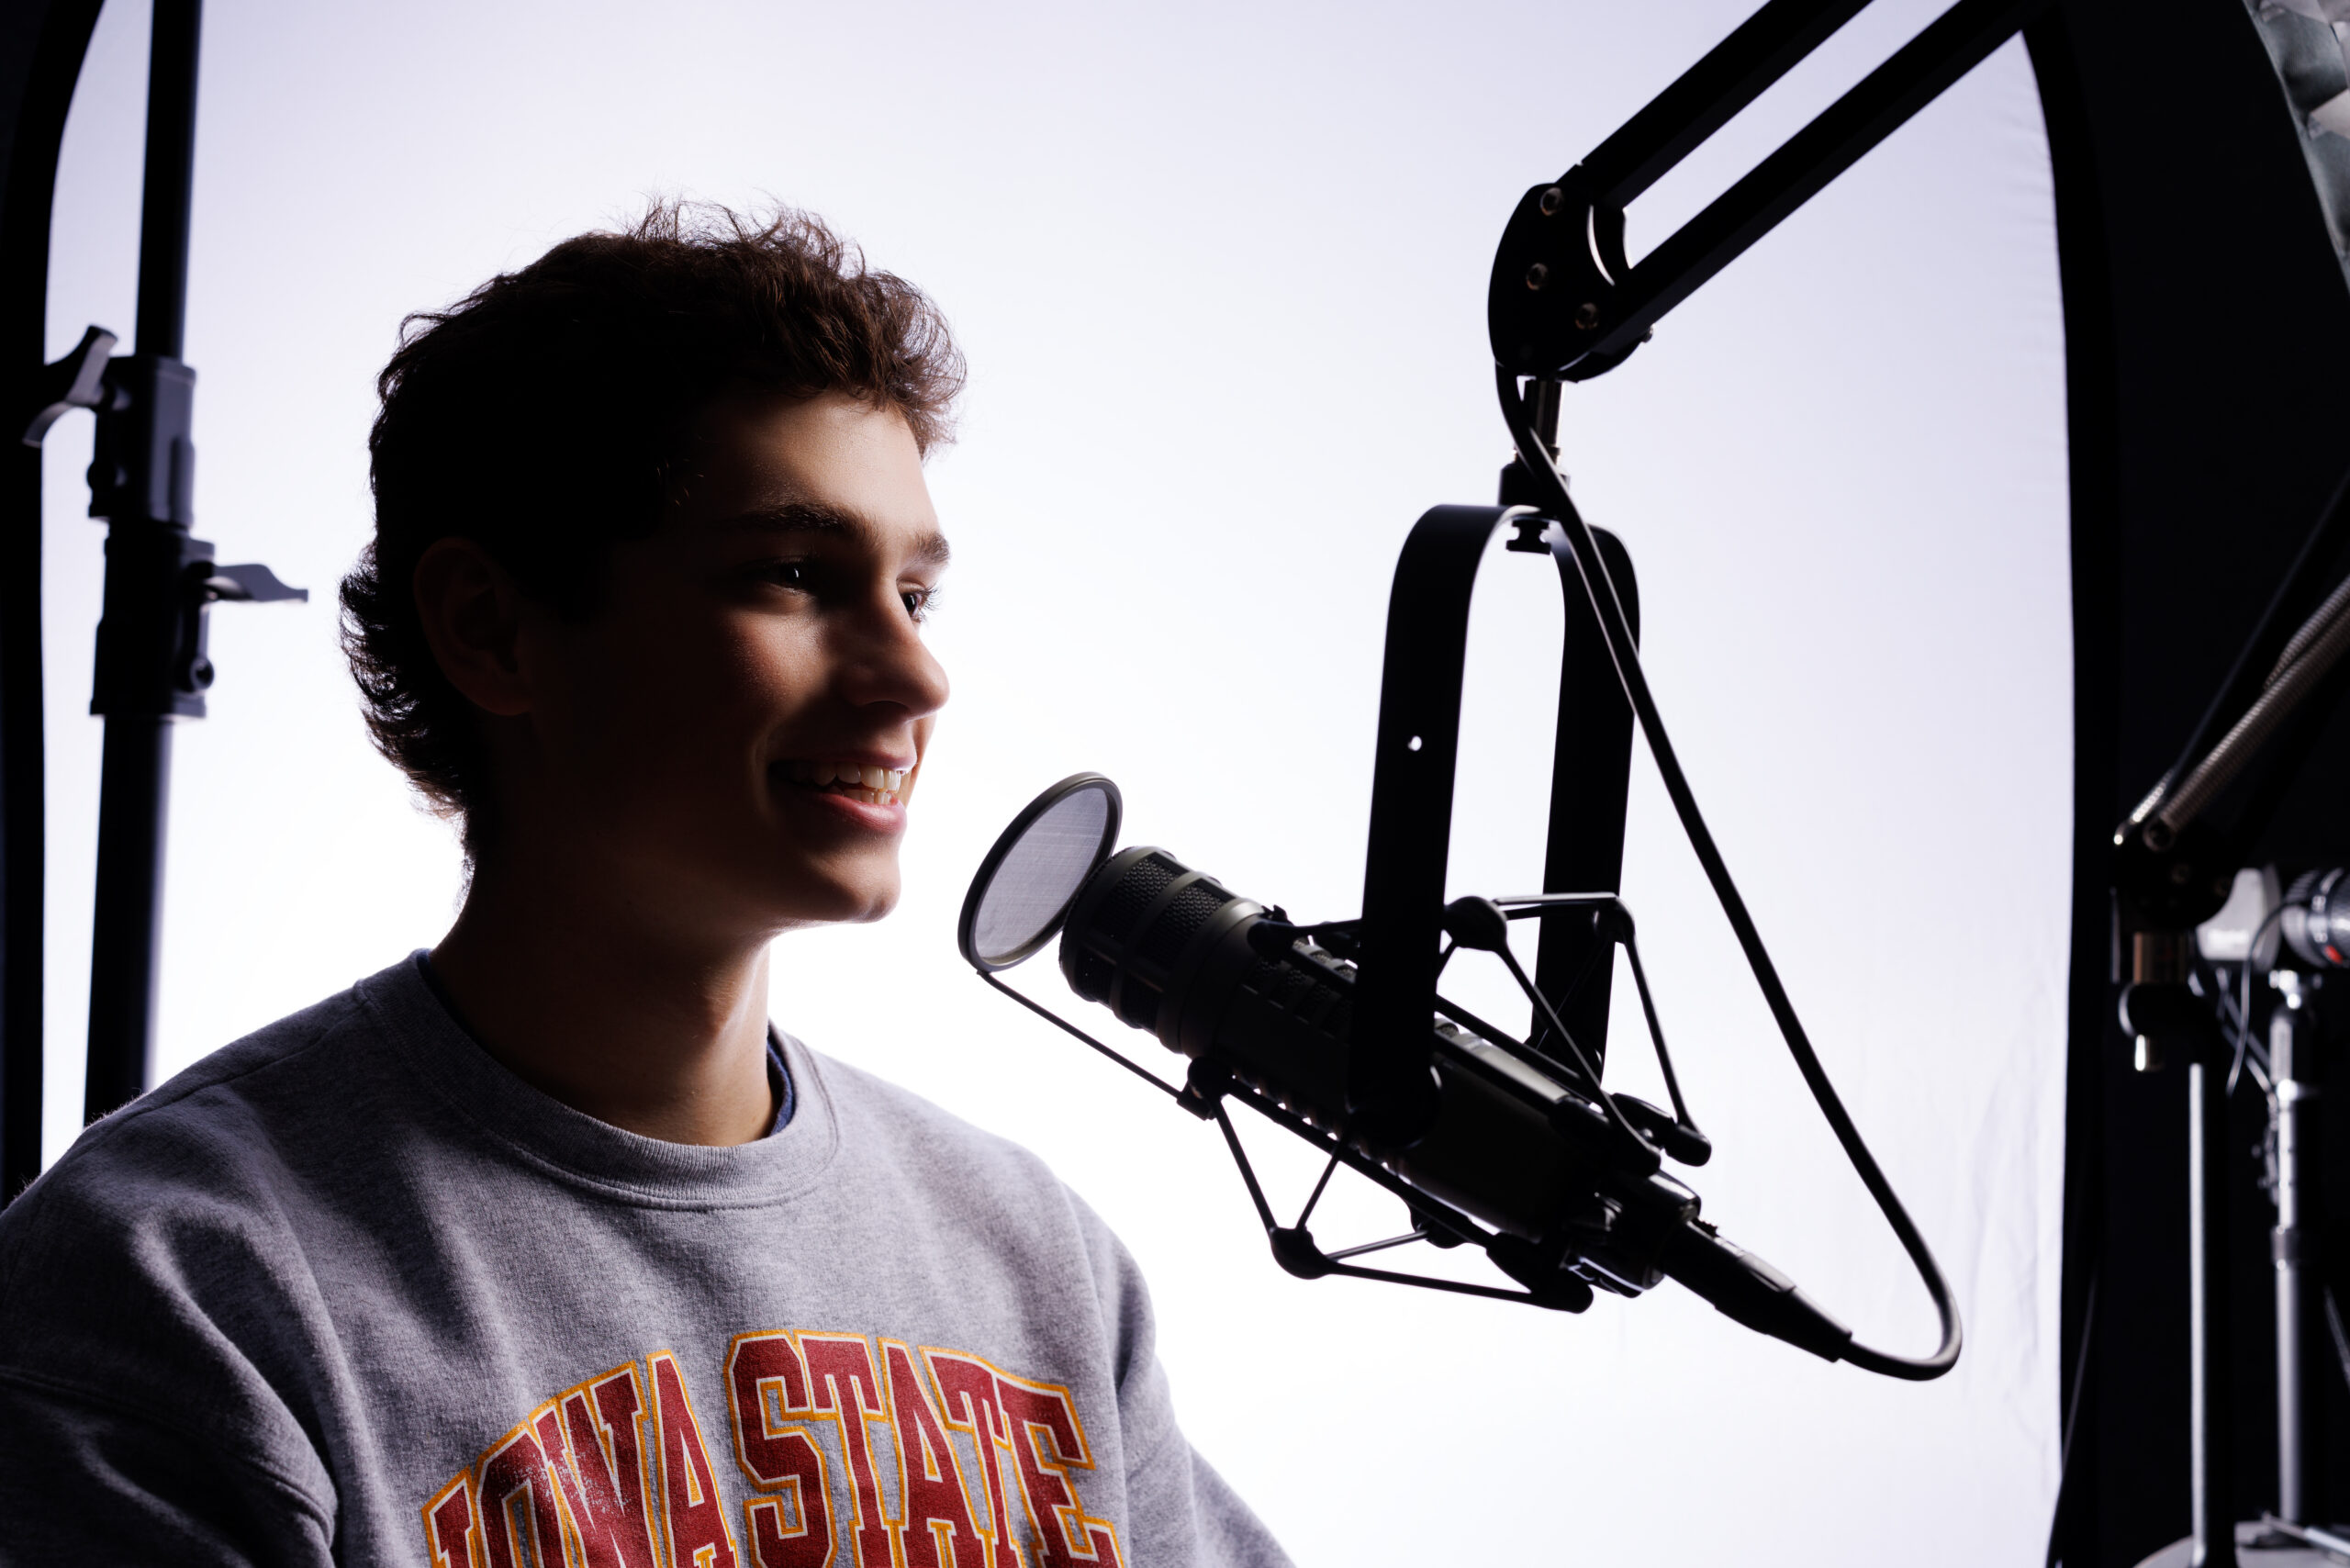 Male student wearing a grey Iowa State sweatshirt talking into a podcast mic.